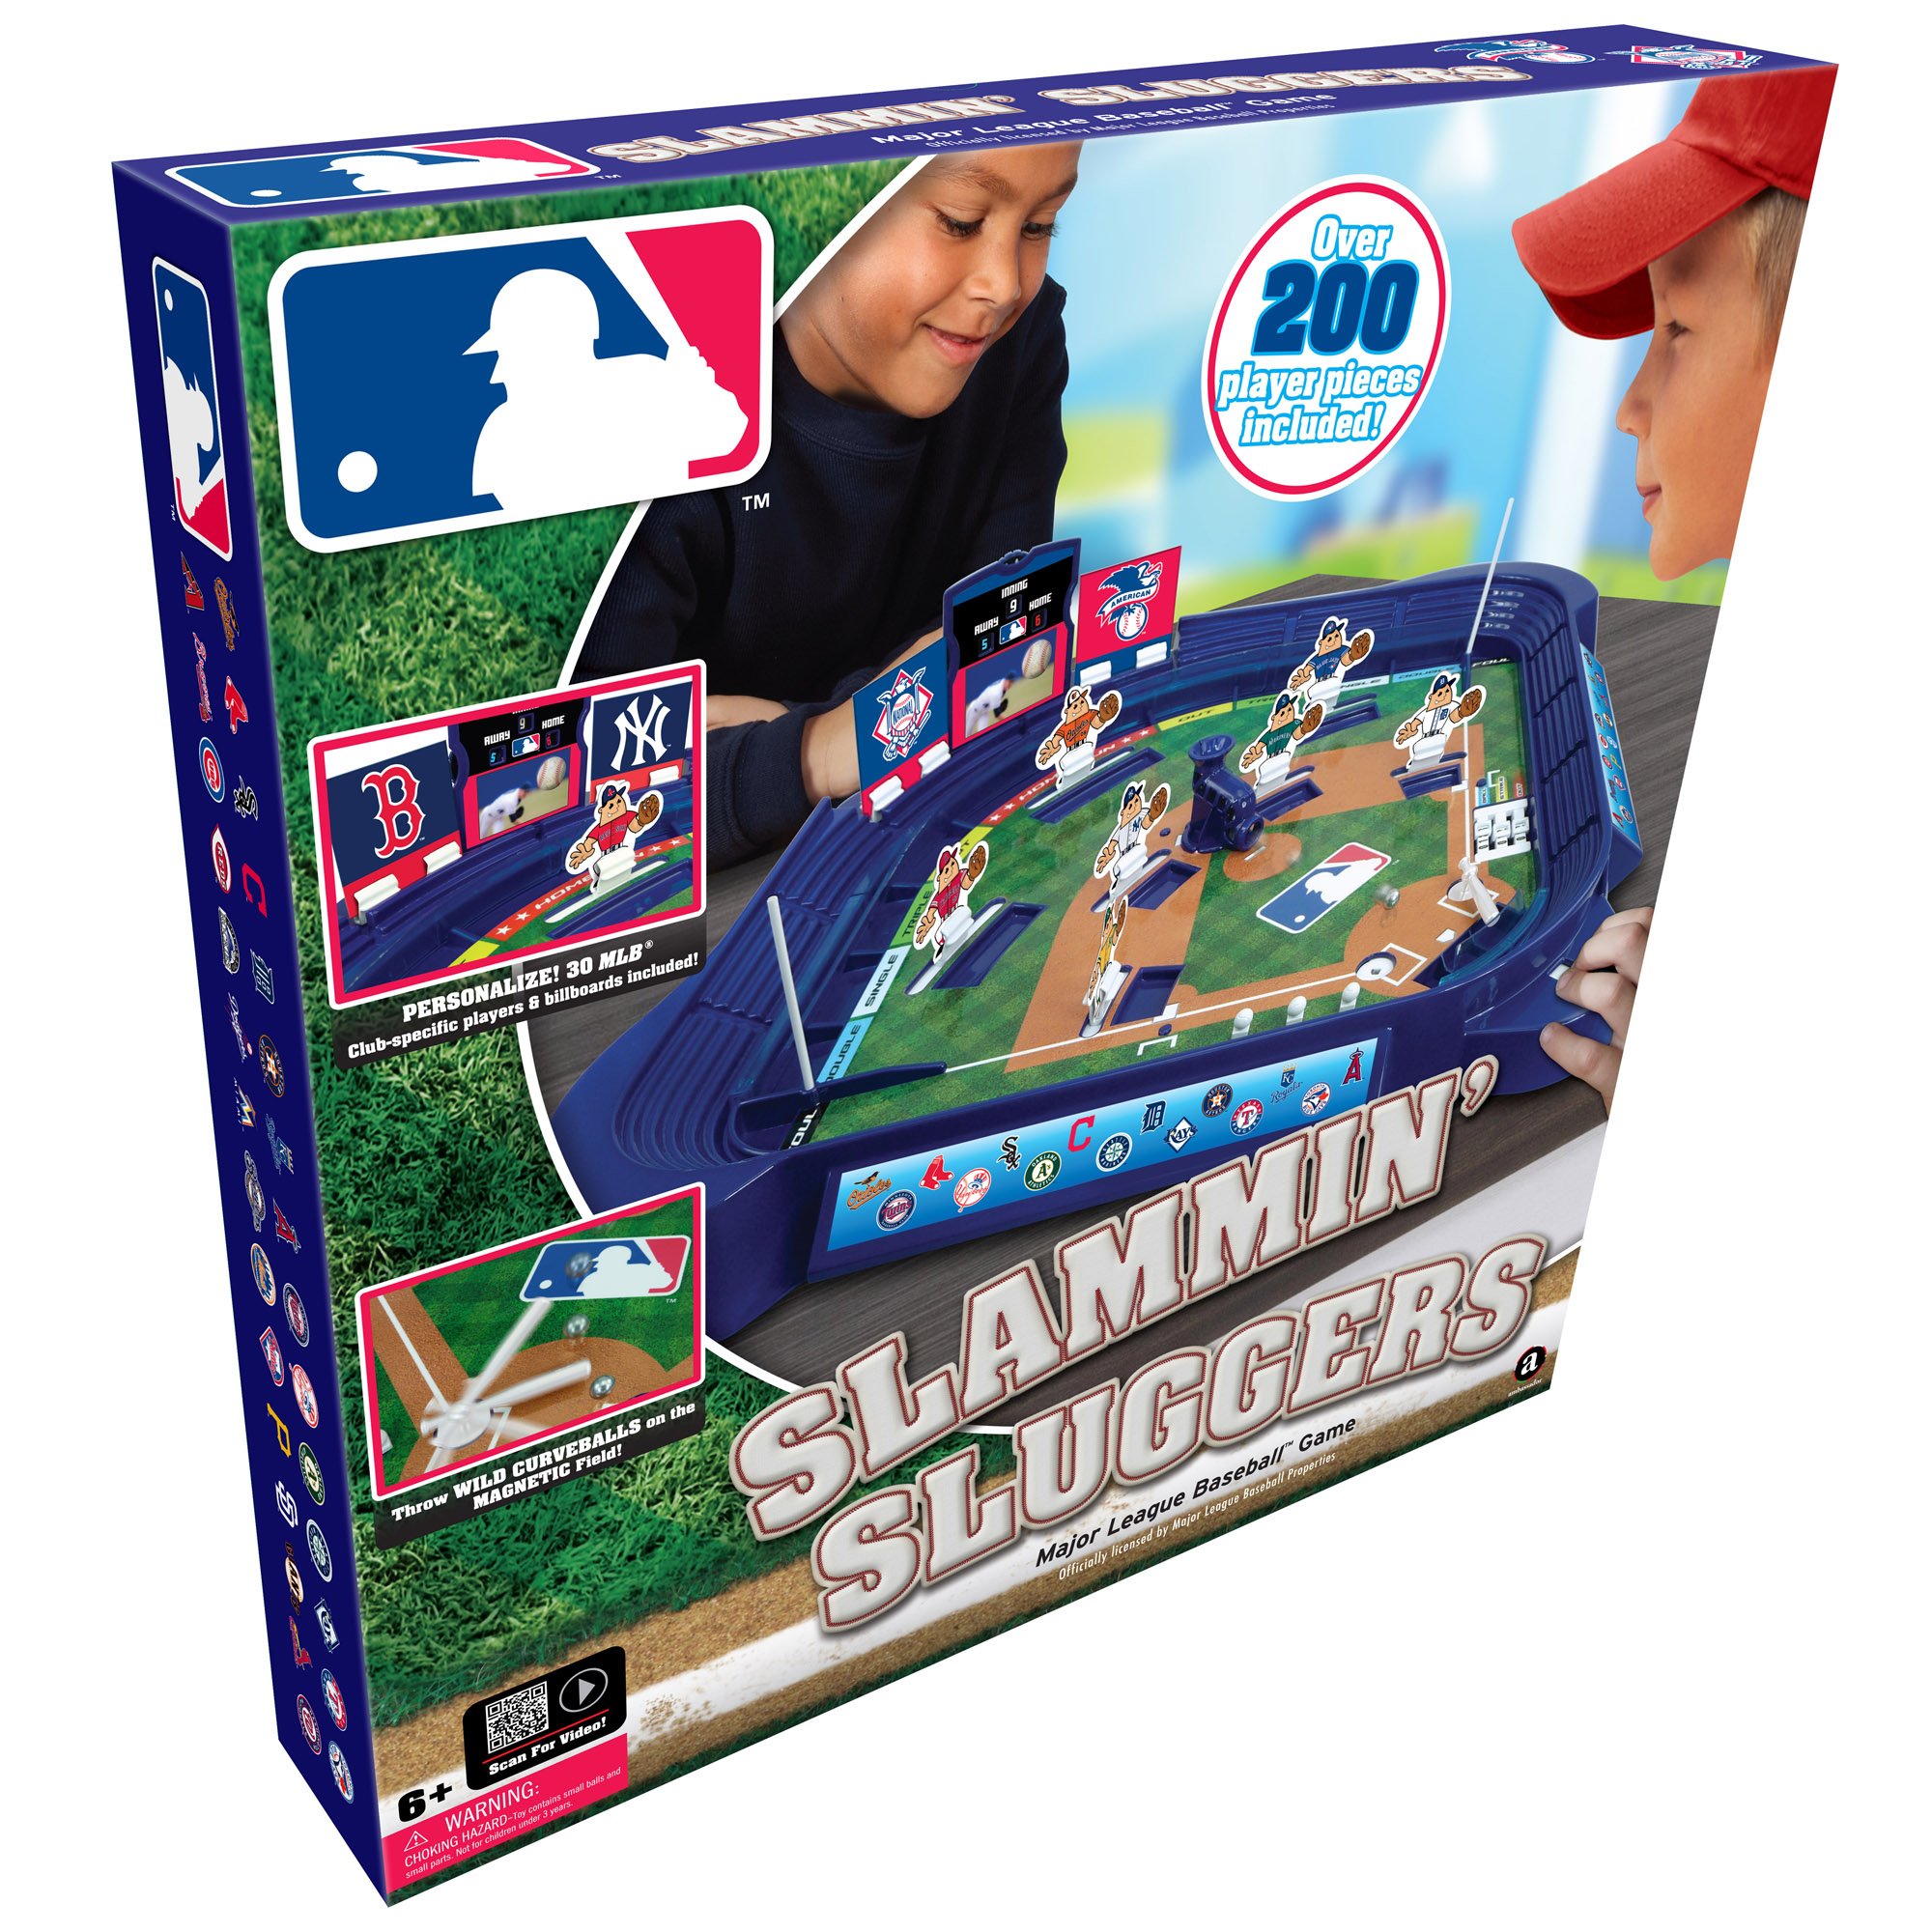 MLB Slammin' Sluggers Baseball Game